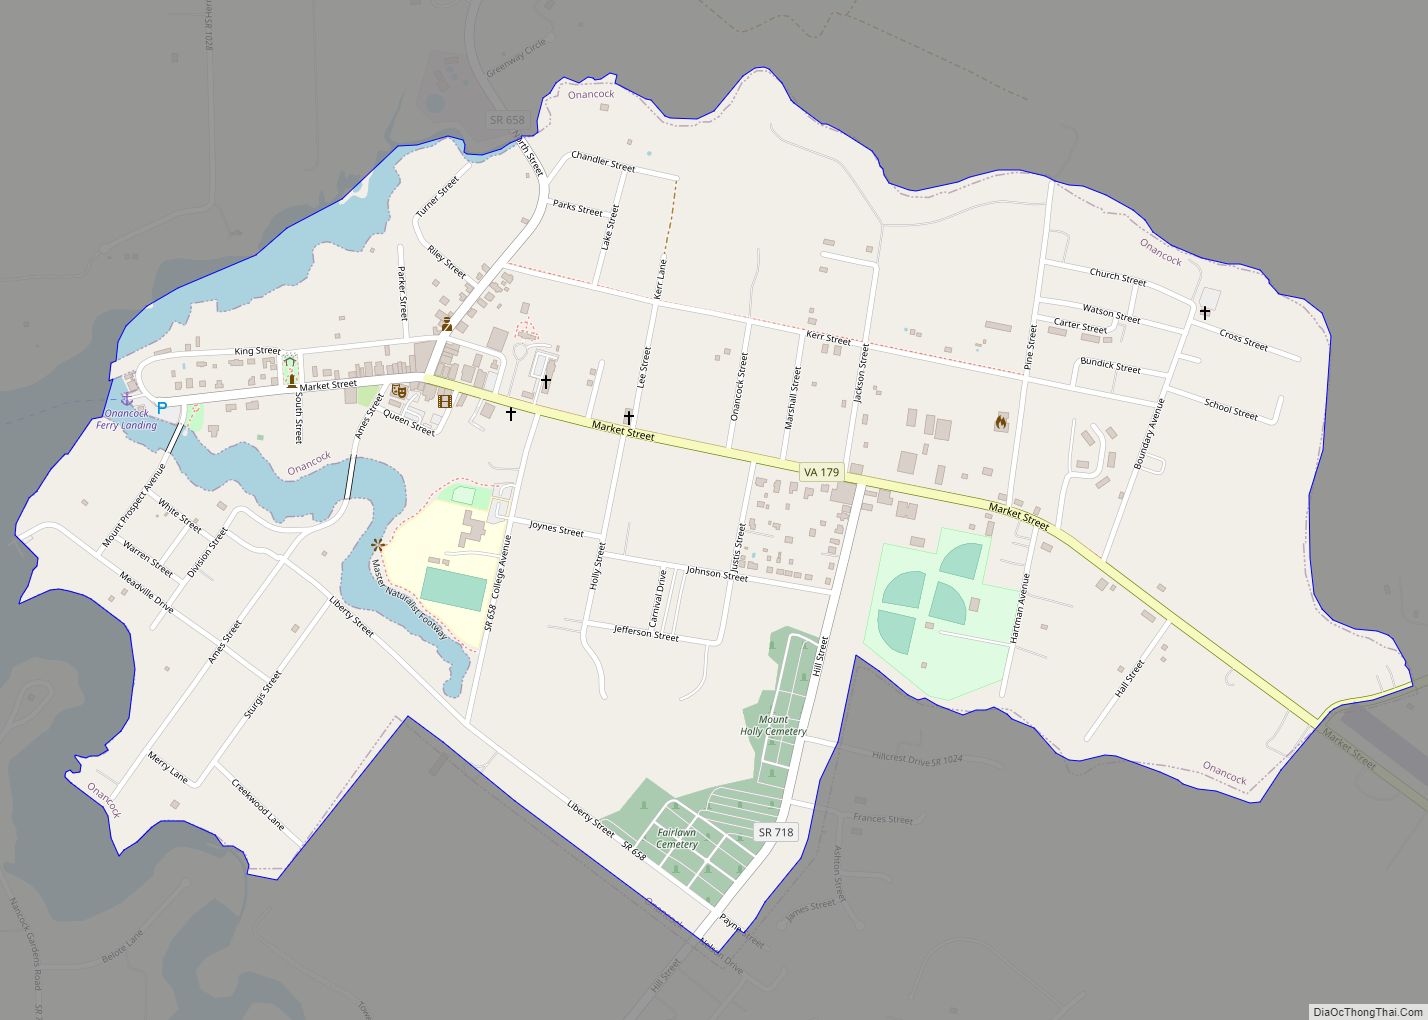 Map of Onancock town